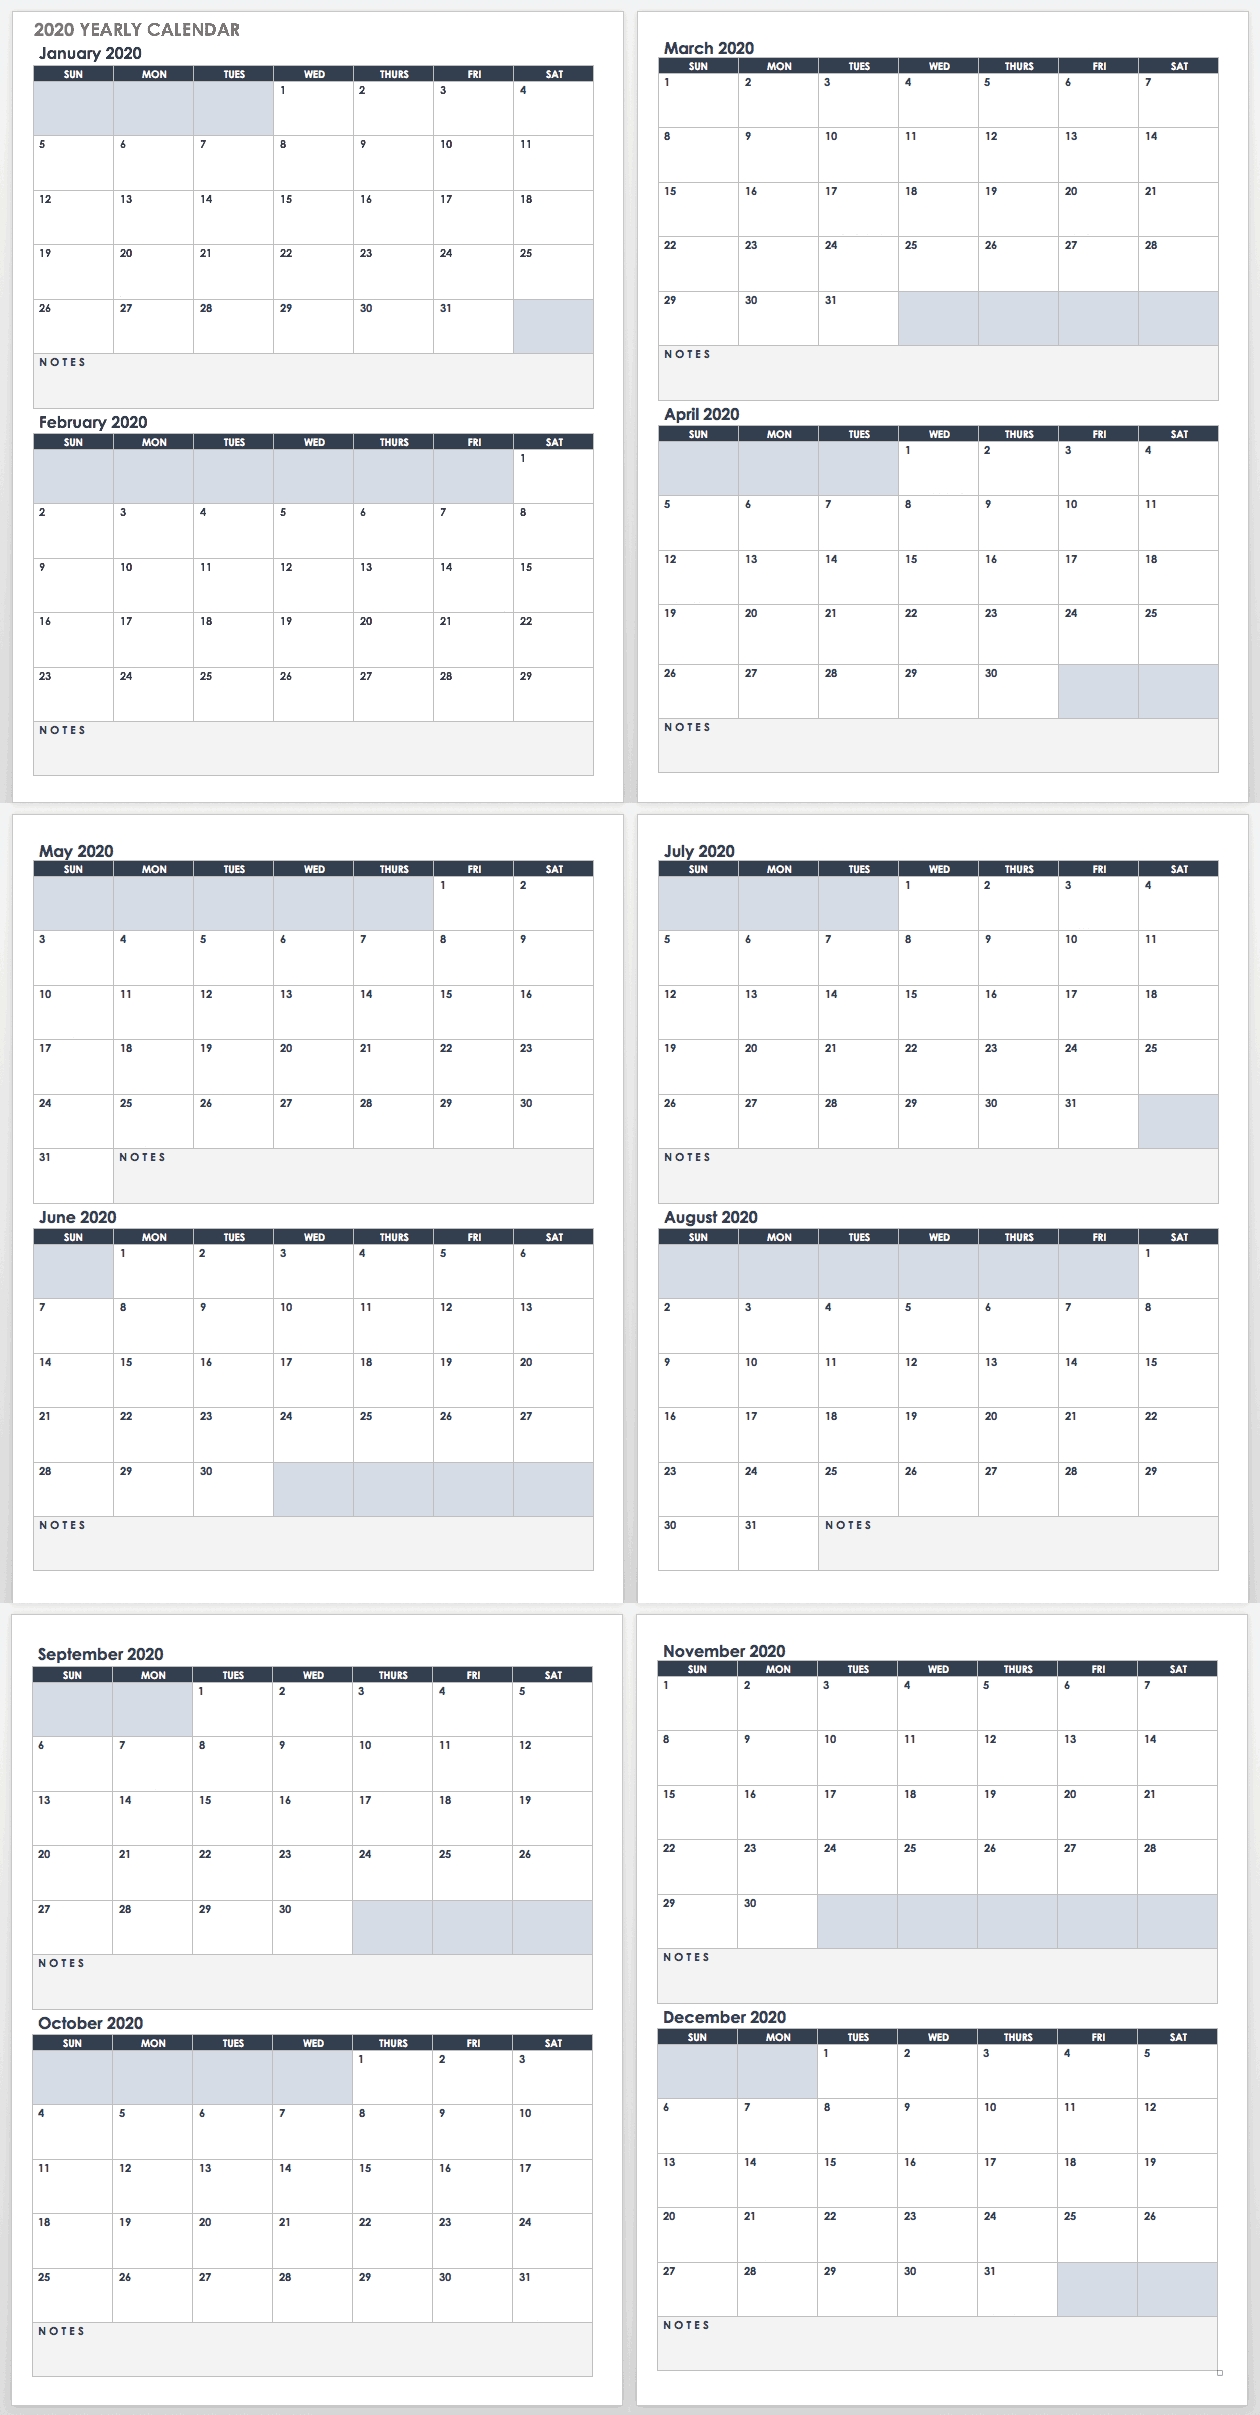 Free Google Calendar Templates | Smartsheet with regard to 2020 Year At A Glace Attendance Calendar